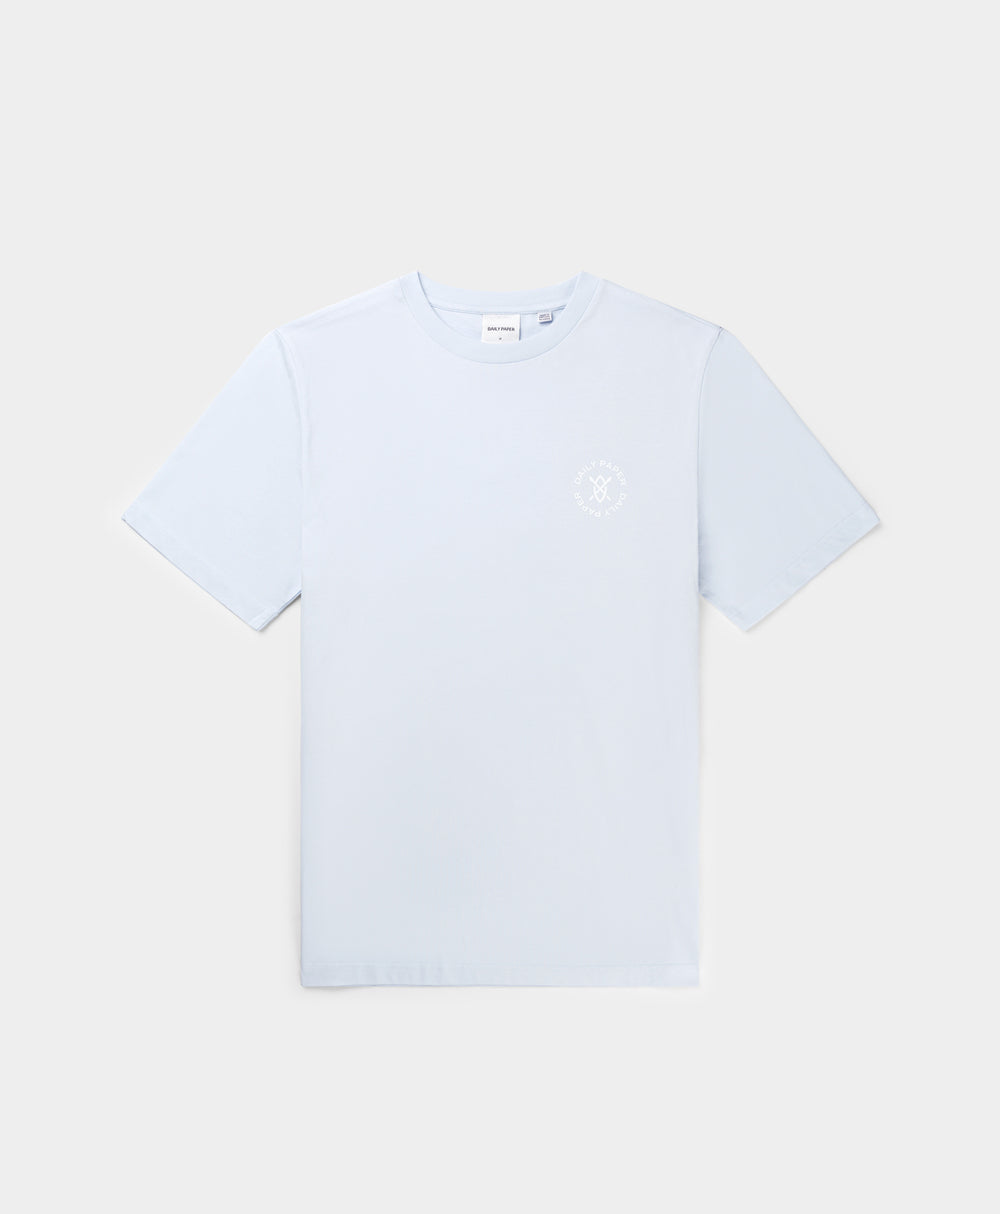 DP - Halogen Blue Circle T-Shirt - Packshot - Front